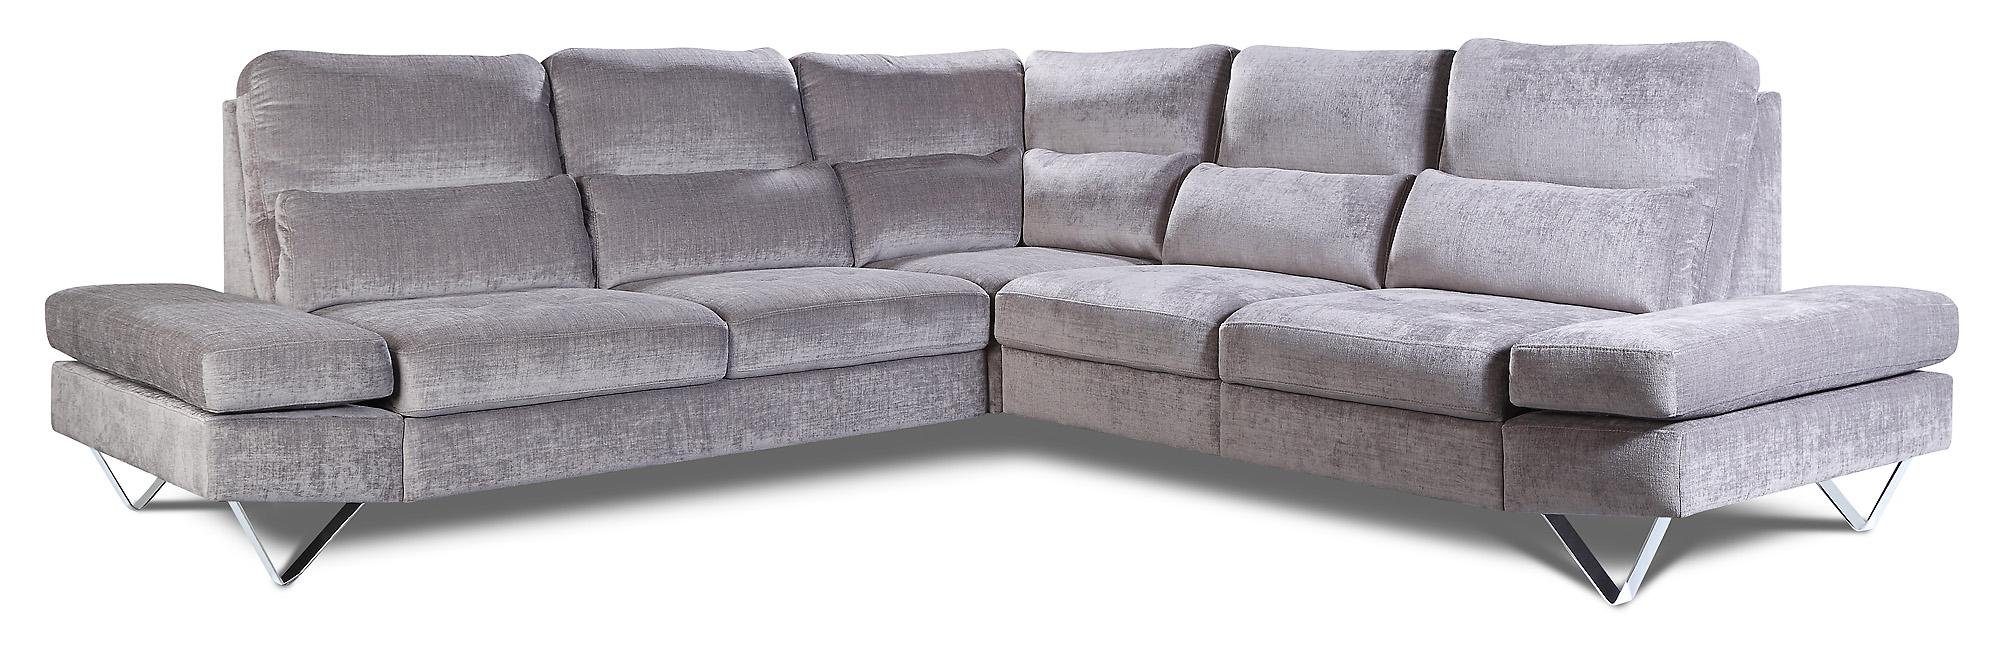 JVmoebel Ecksofa, Ecksofa Couch Verstellbare Polster Multifunktions Couchen Relax